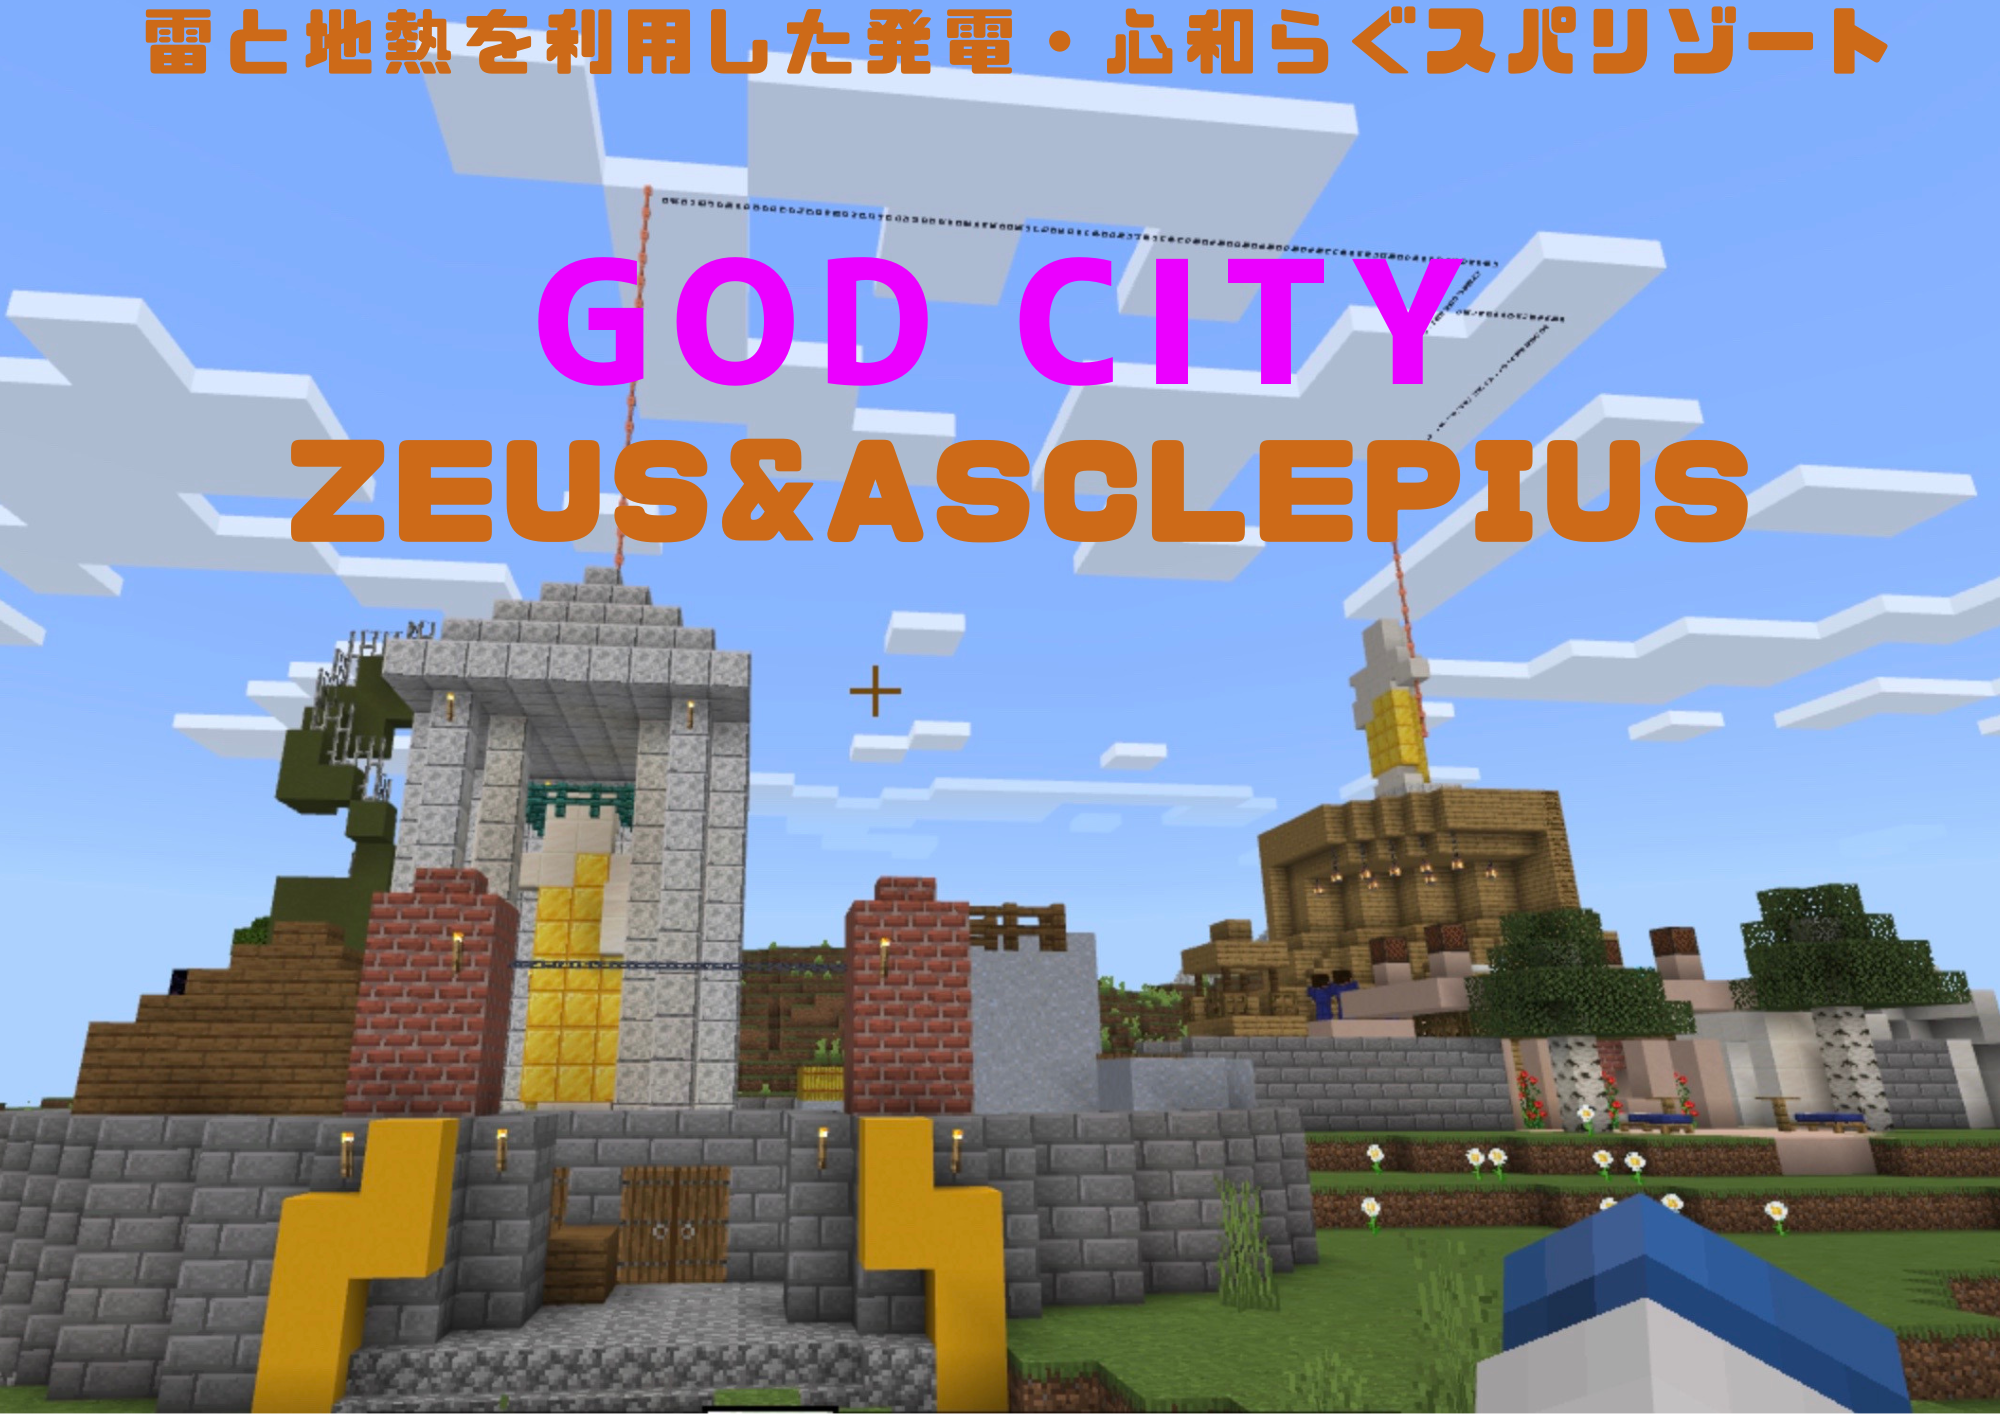 God city      Zeus&Asclepius